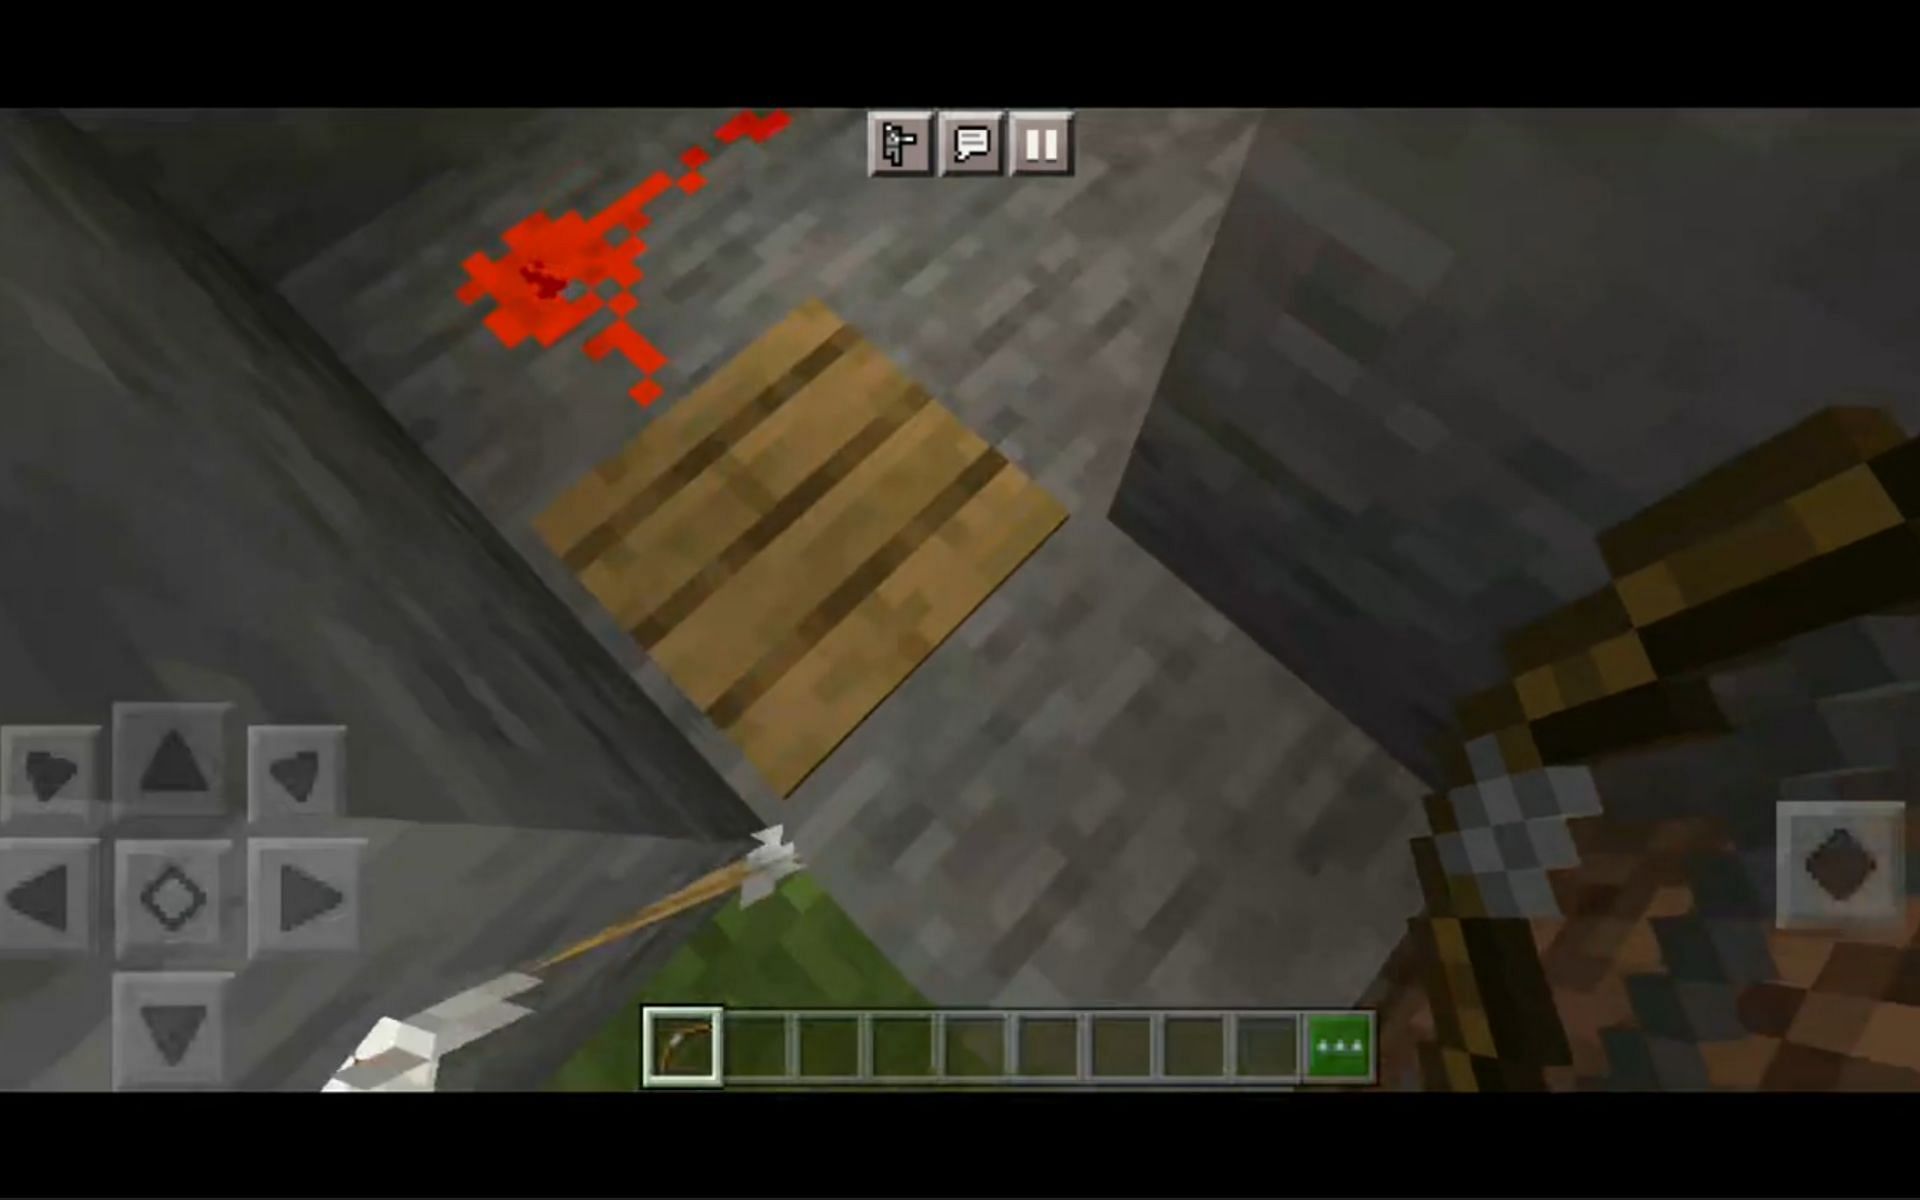 Arrow hitbox is big enough to go through walls in Minecraft (Image via u/MineralwasTaken Reddit)